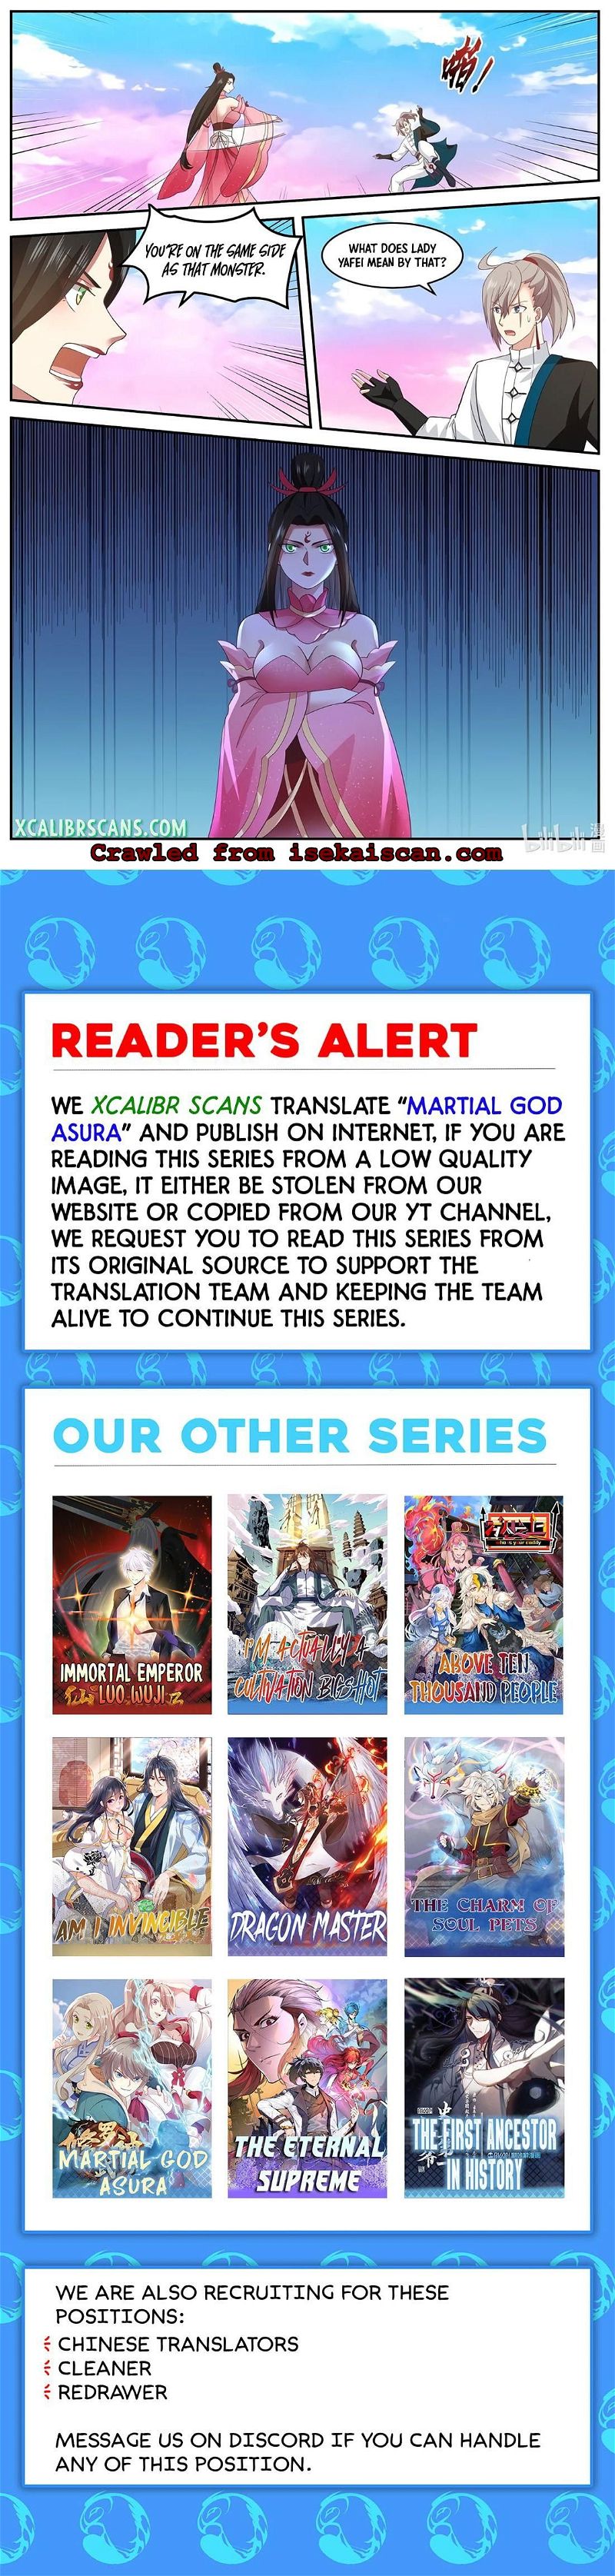 Martial God Asura Chapter 447 page 10